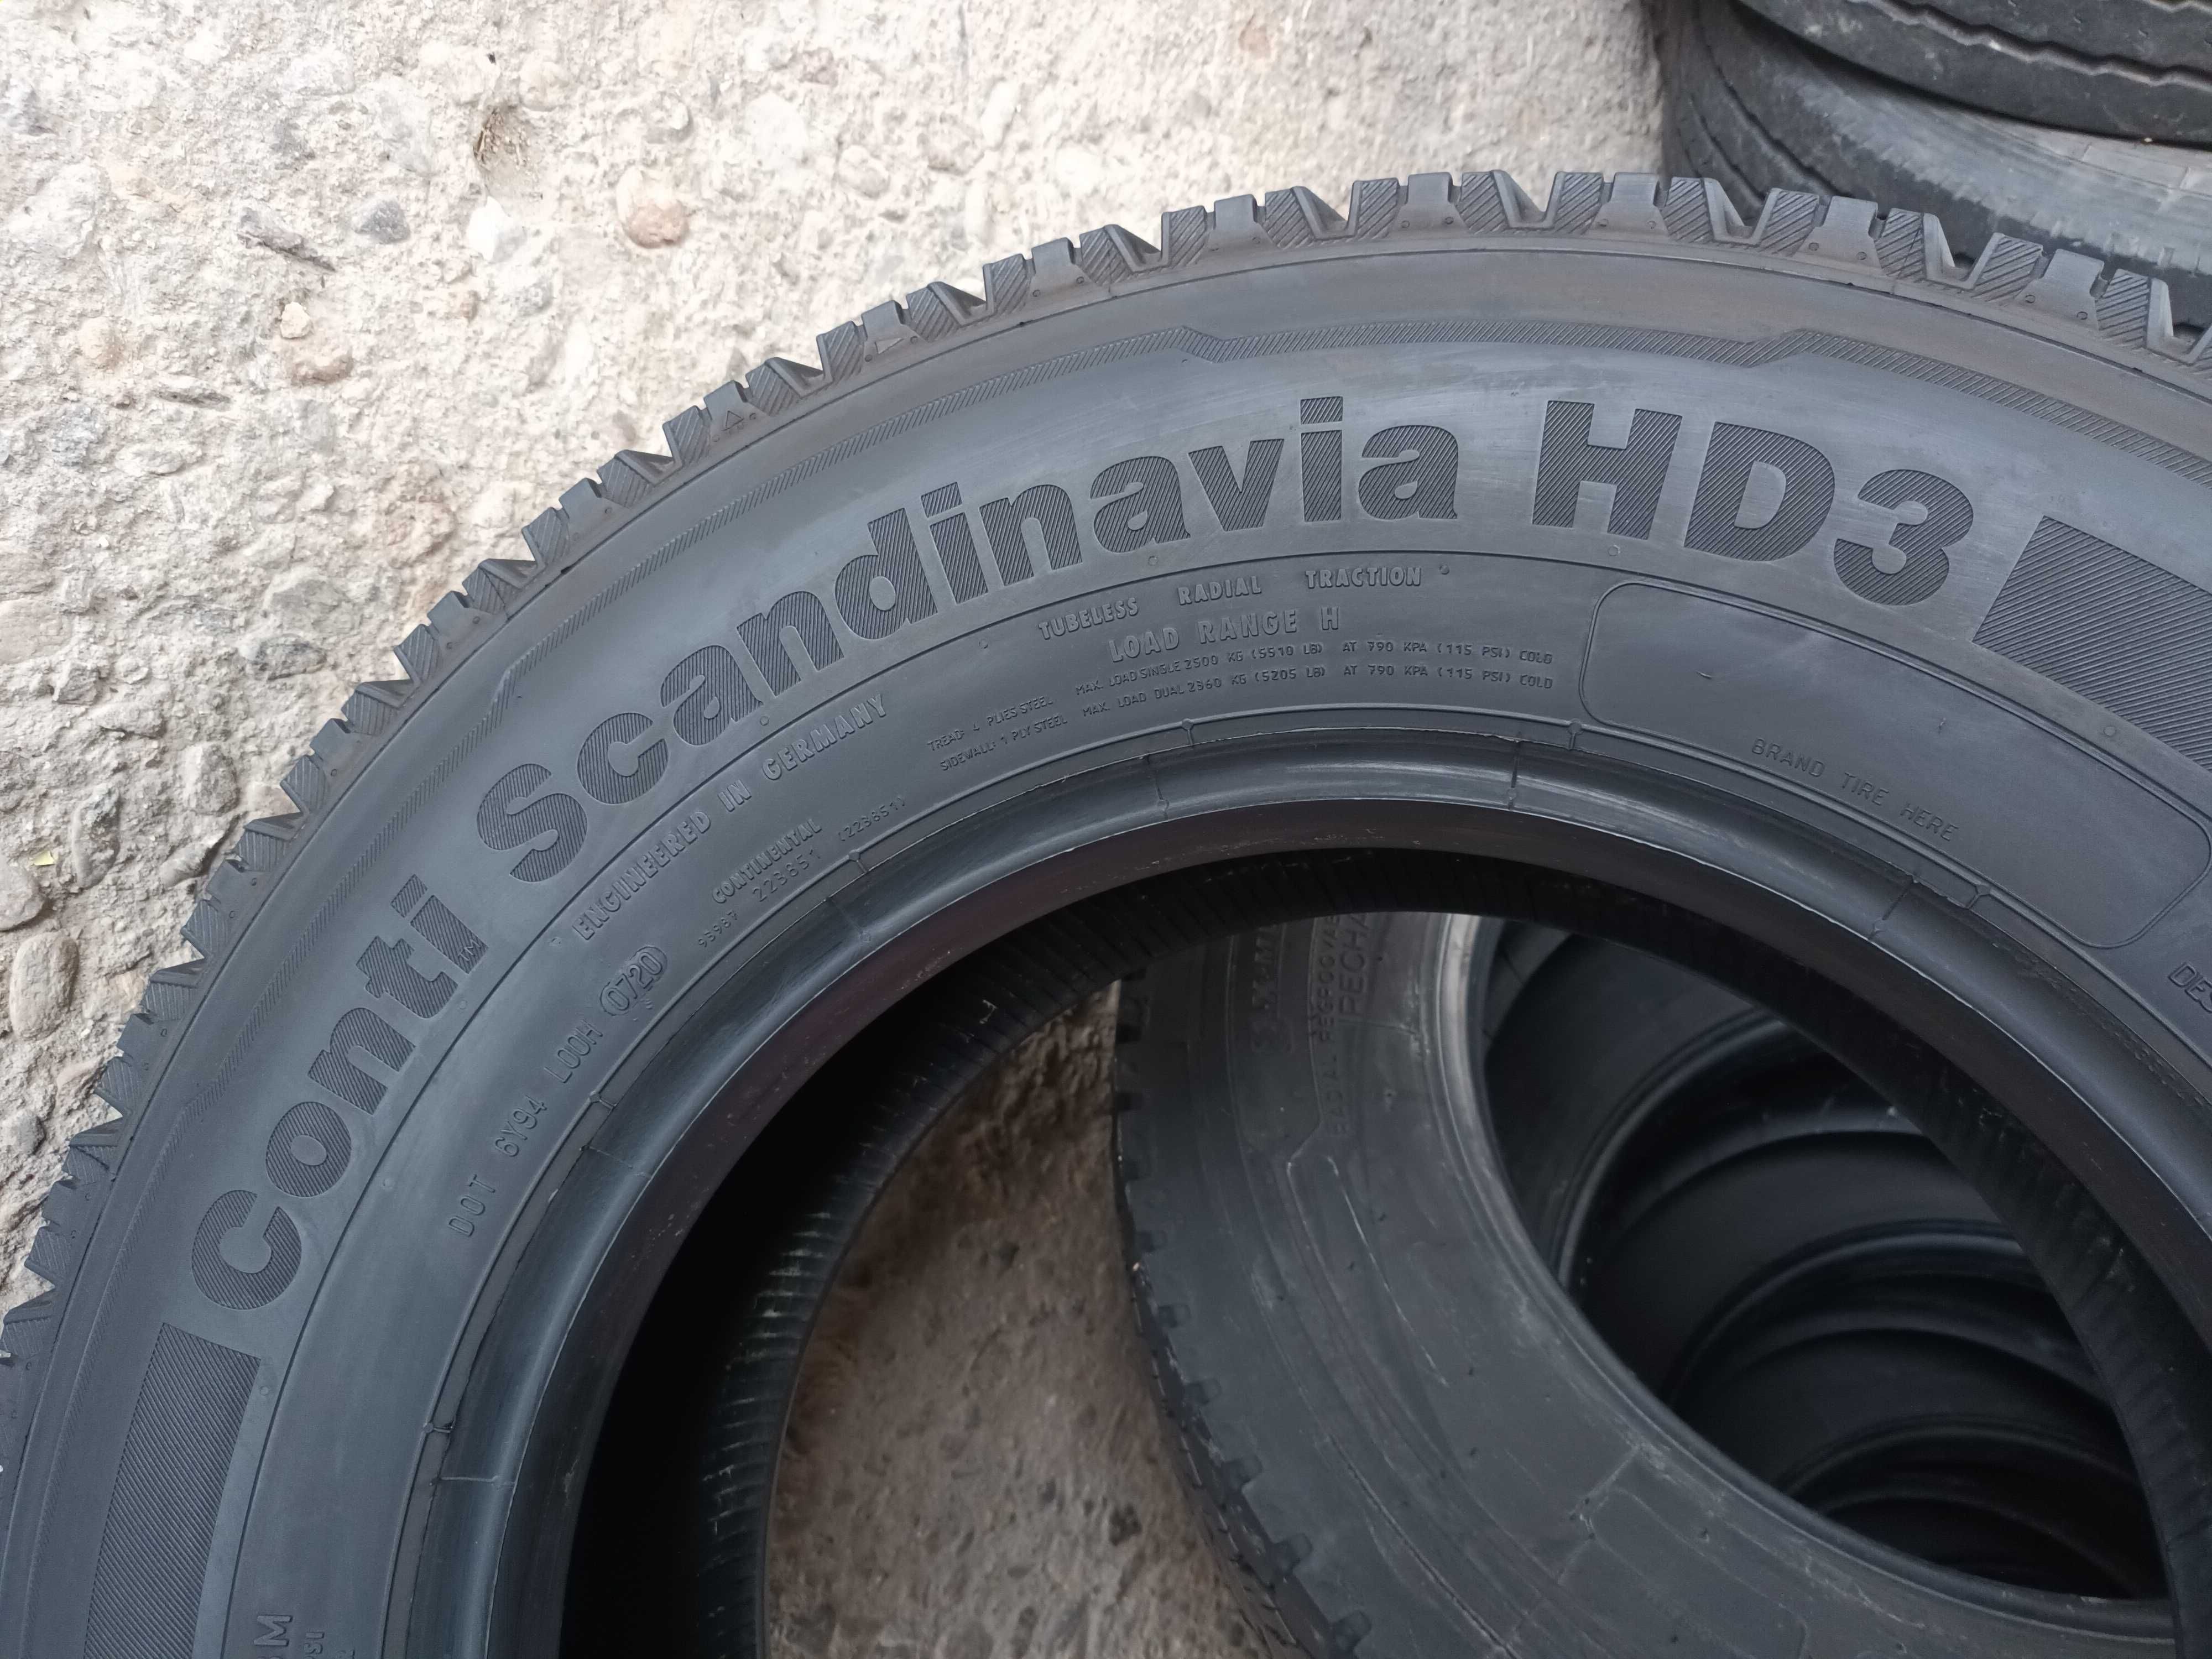 1 товарна гума 265/70 R19.5 Continental Scandinavia HD3 140/138M M+S